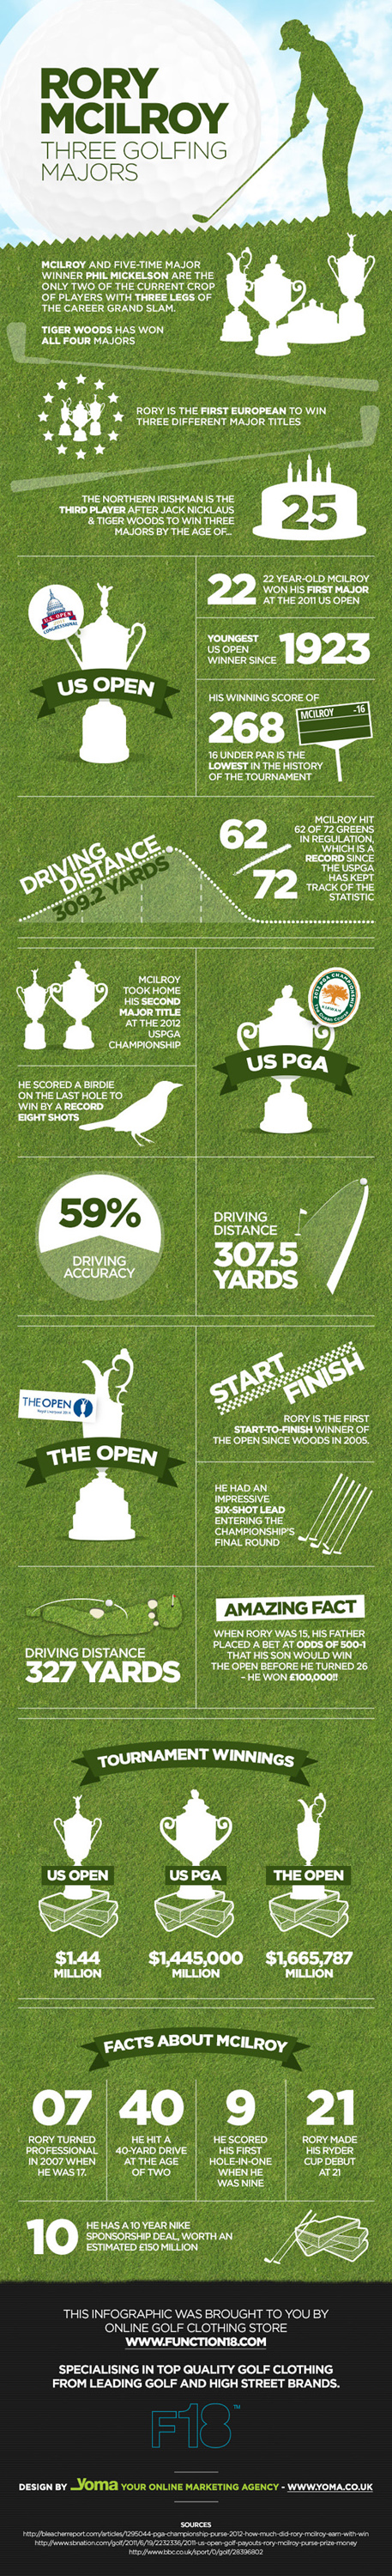 Rory McIlroy: Three Golfing Majors